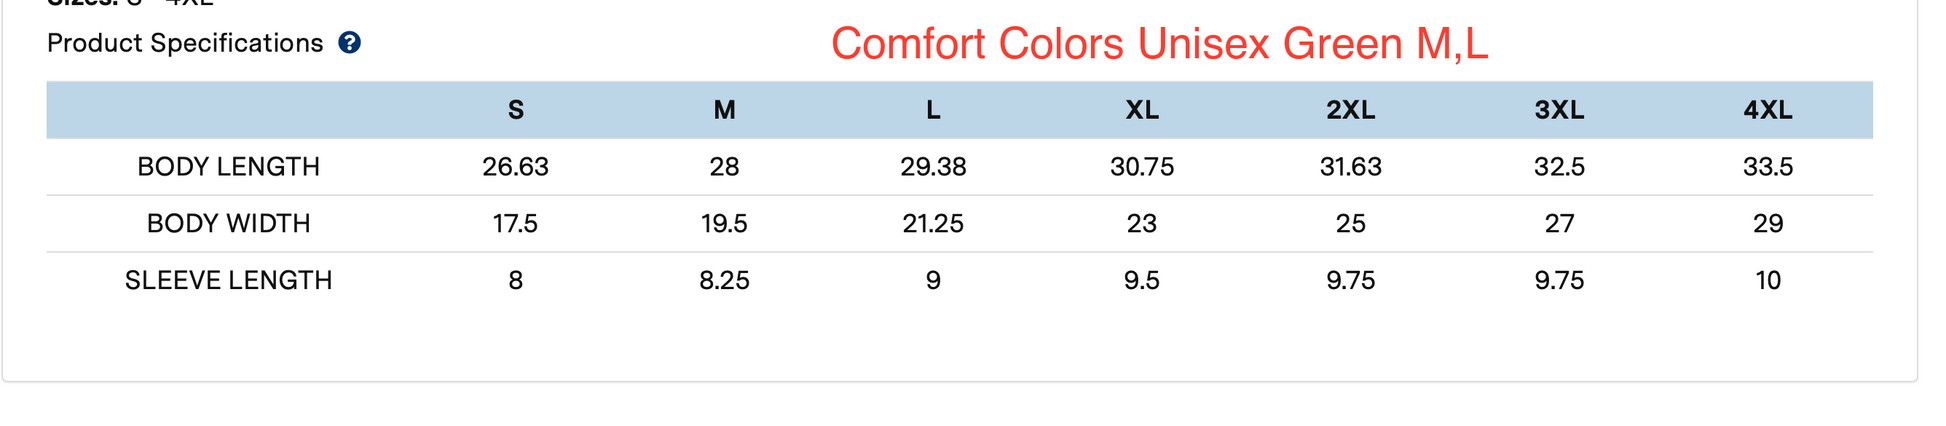 comfort colors size chart c1717